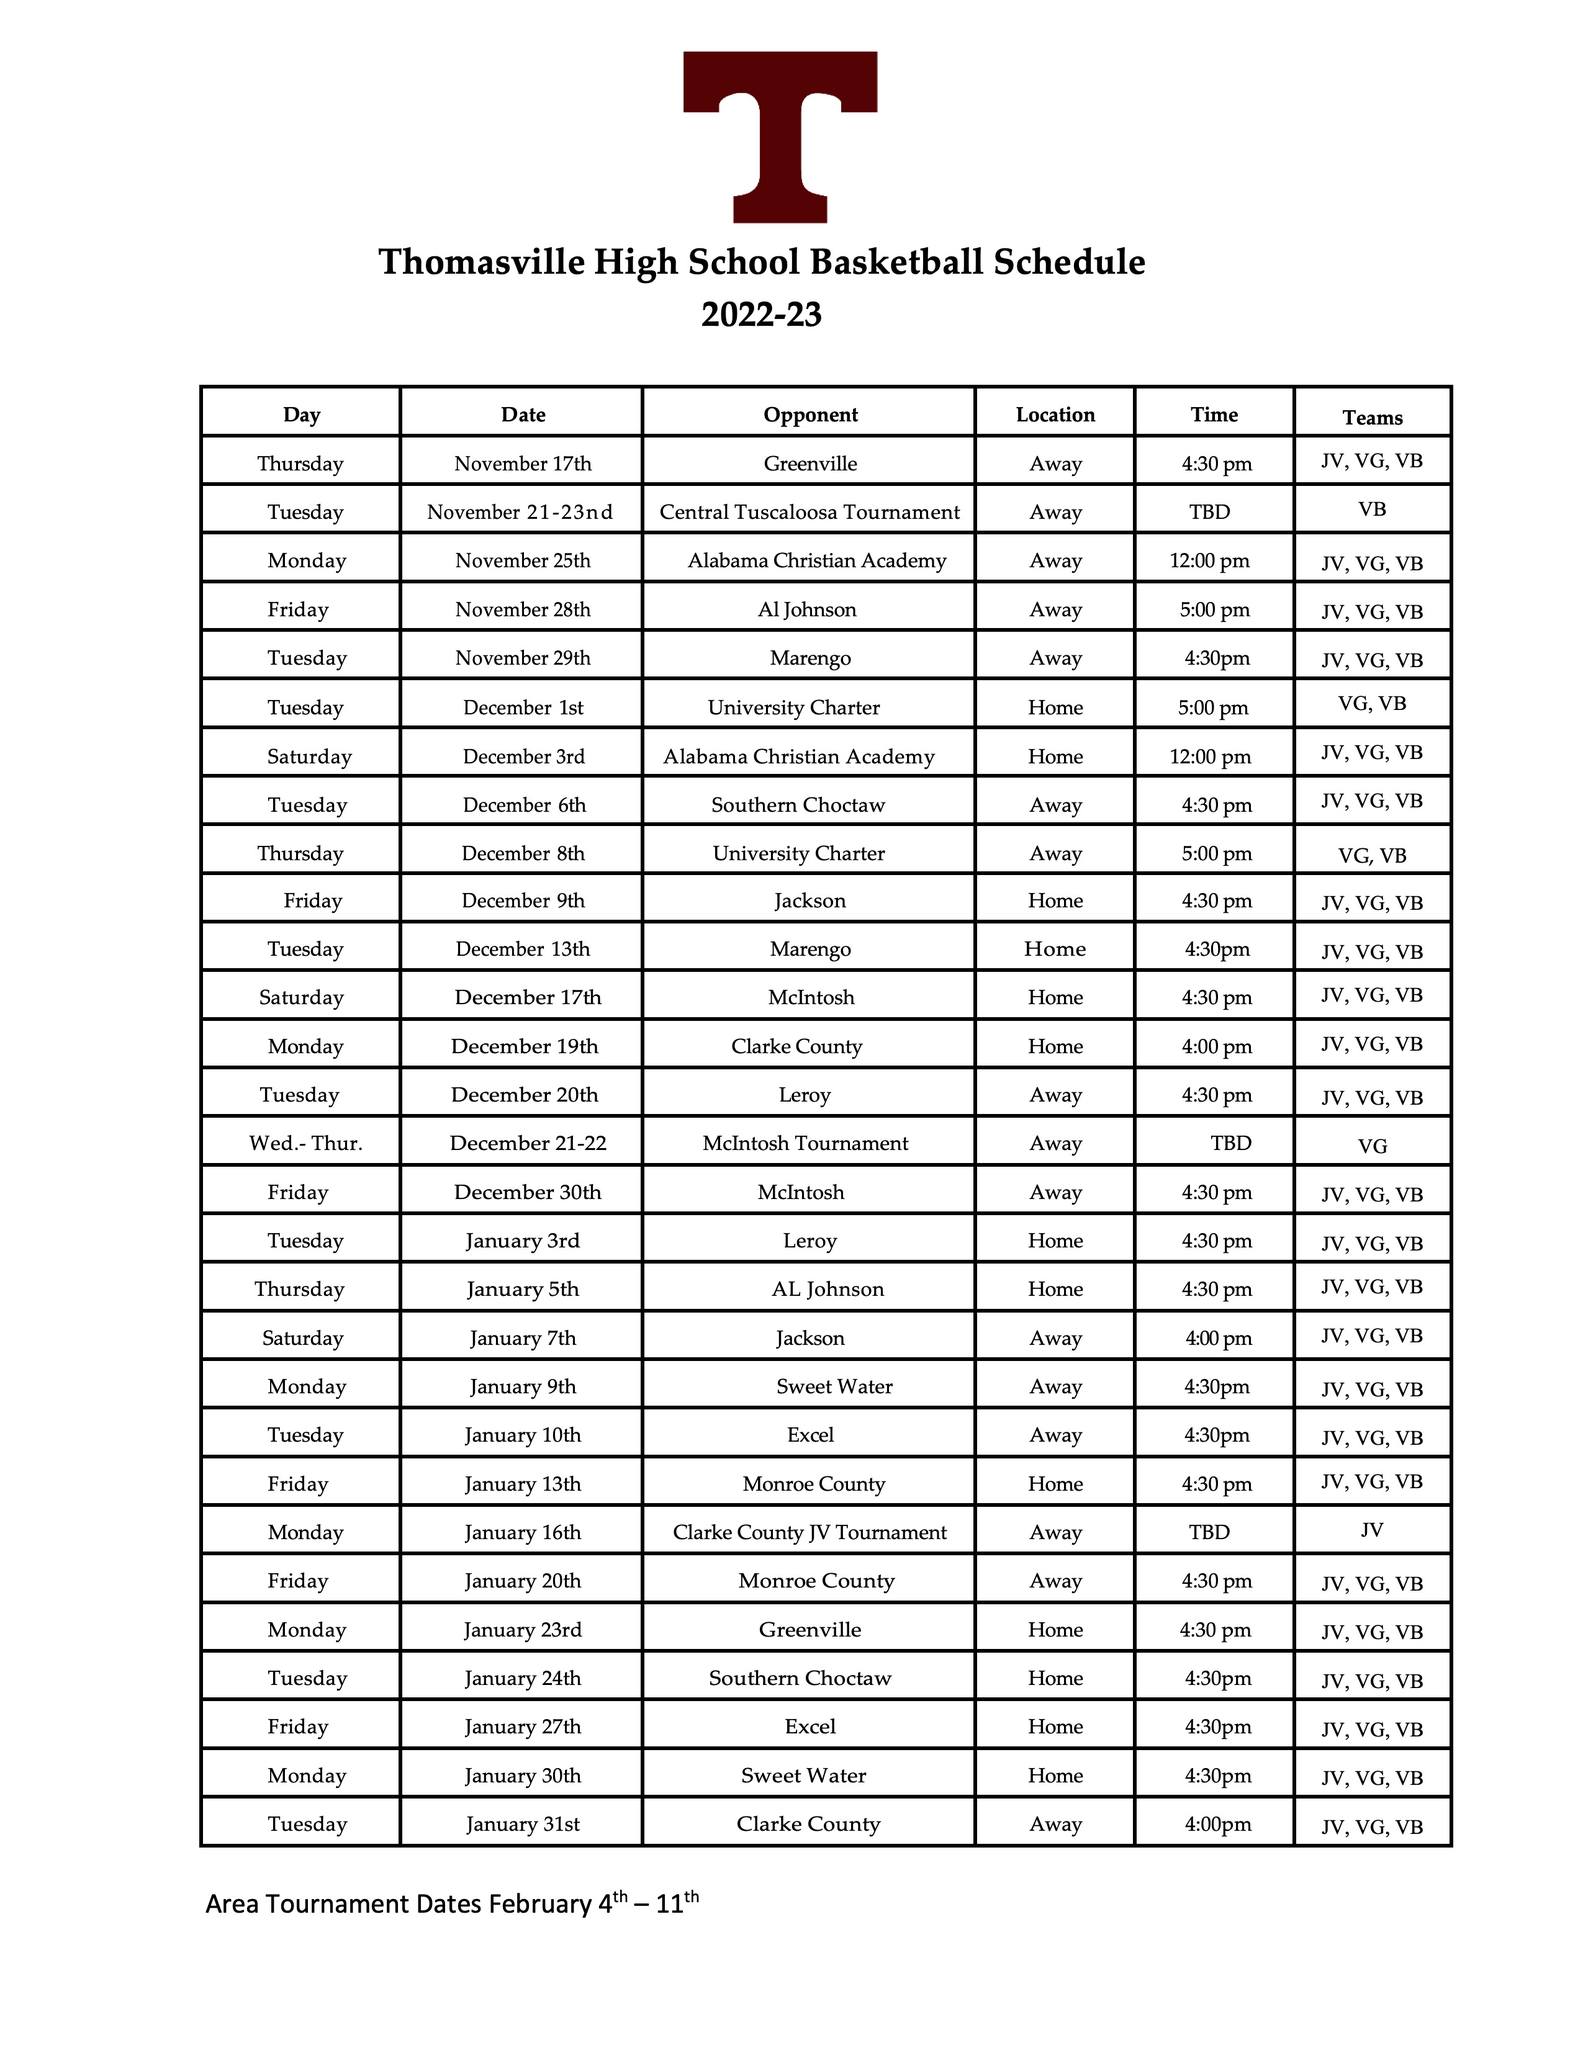 THS basketball schedule 22-23